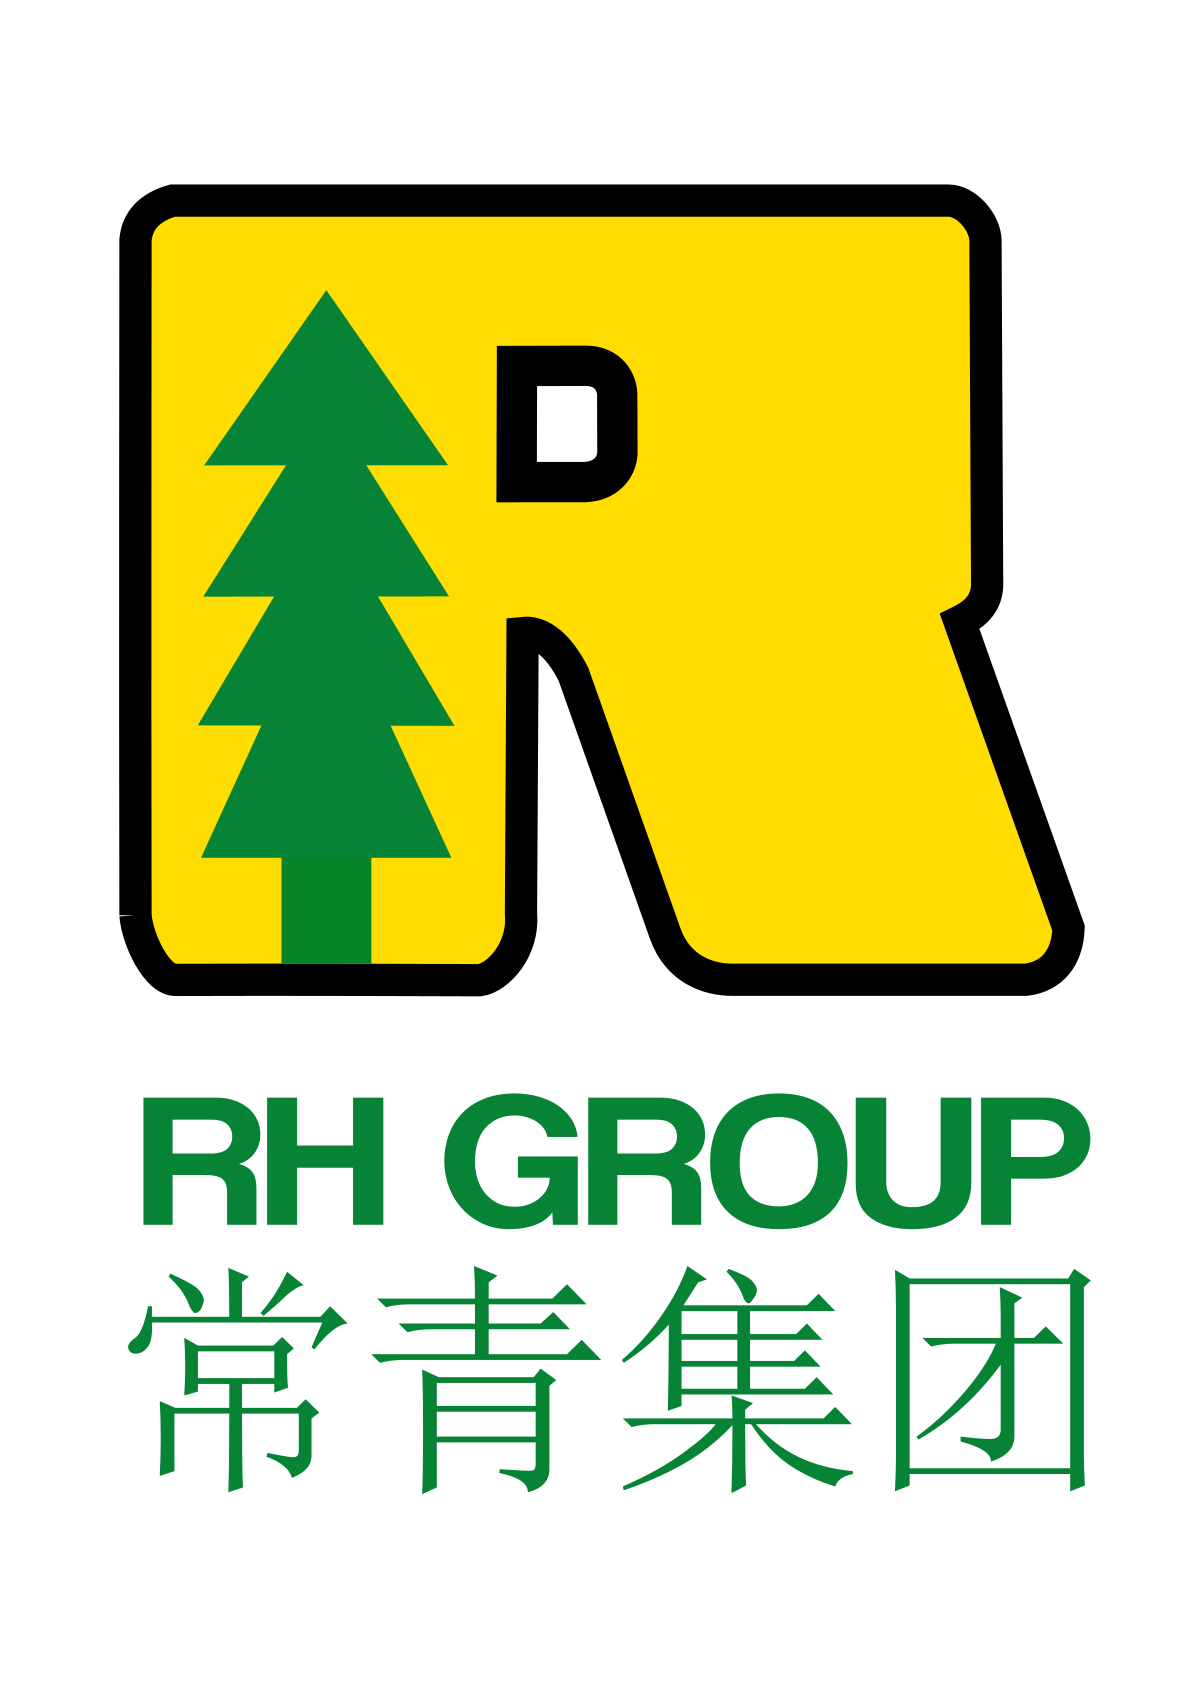 Official_logo_of_RH_Group.svg